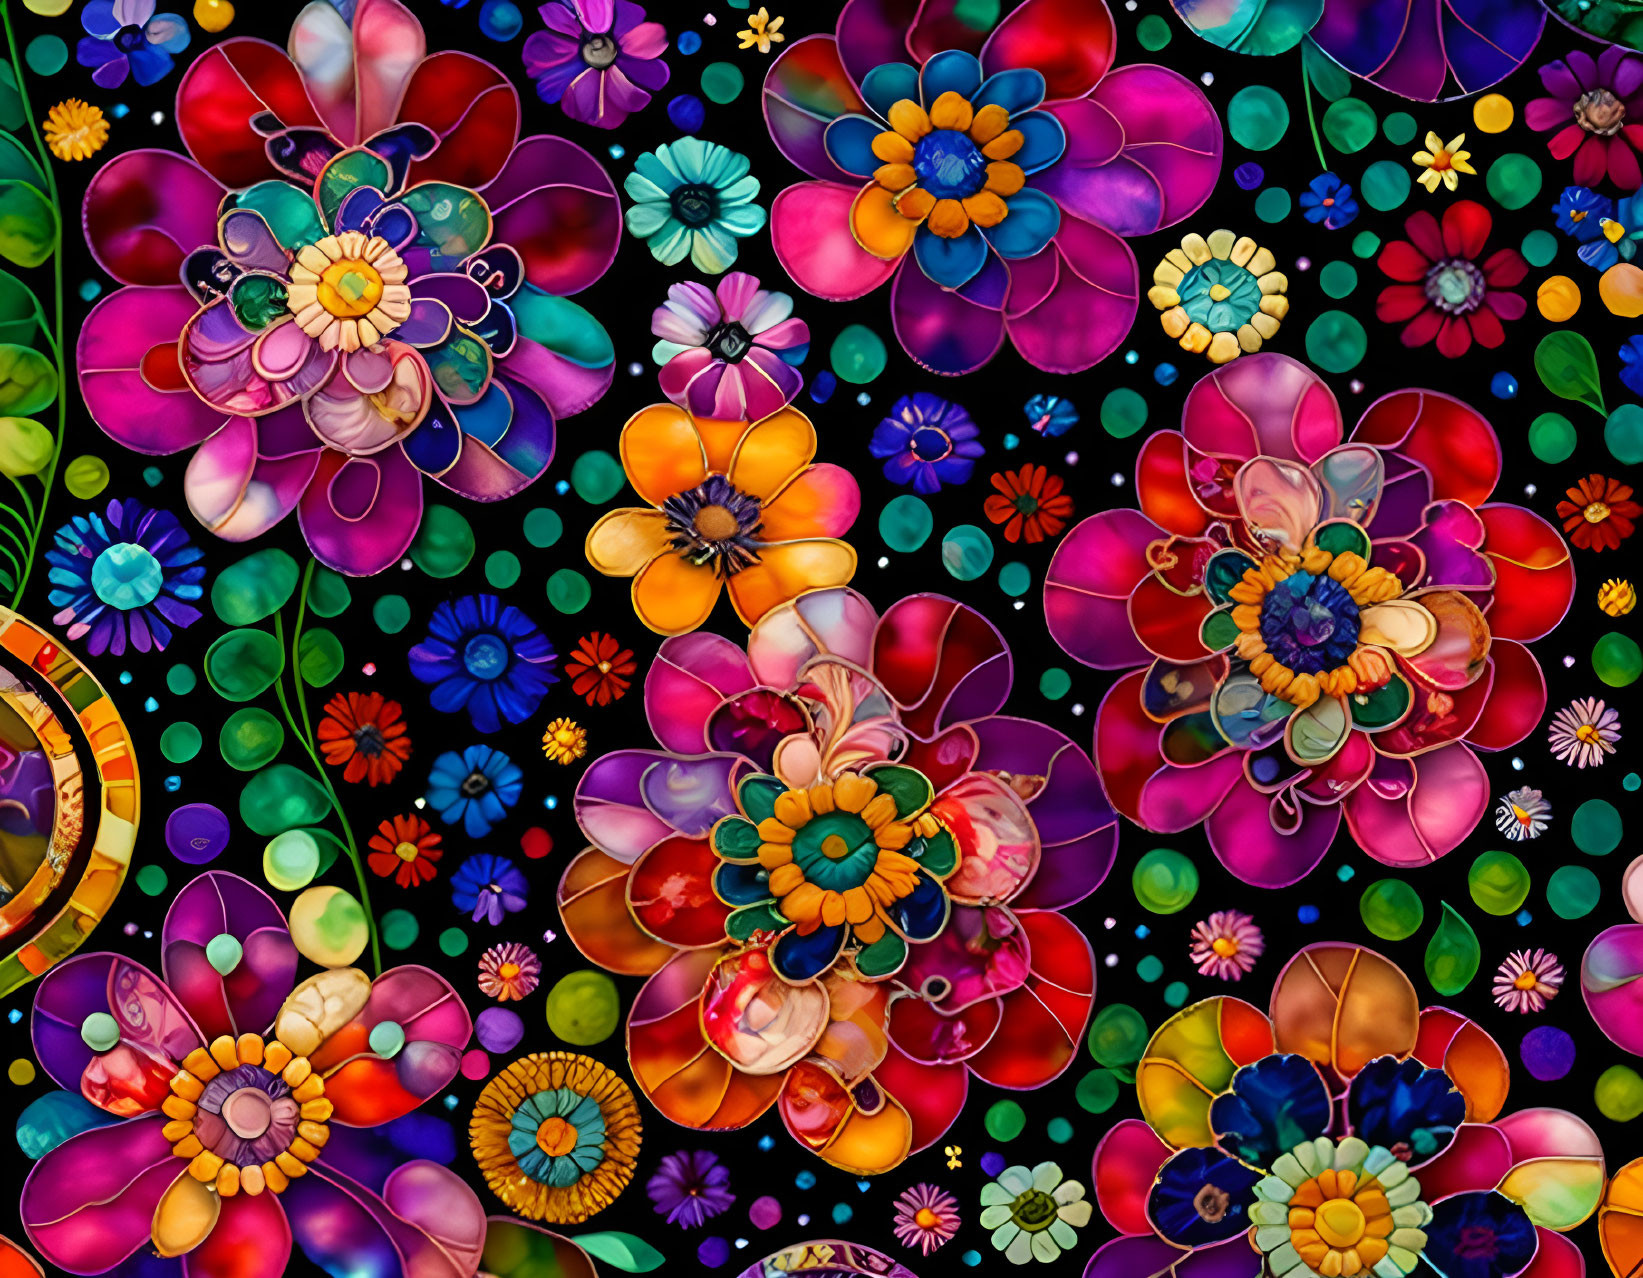 Colorful Stylized Flower Mosaic on Dark Background